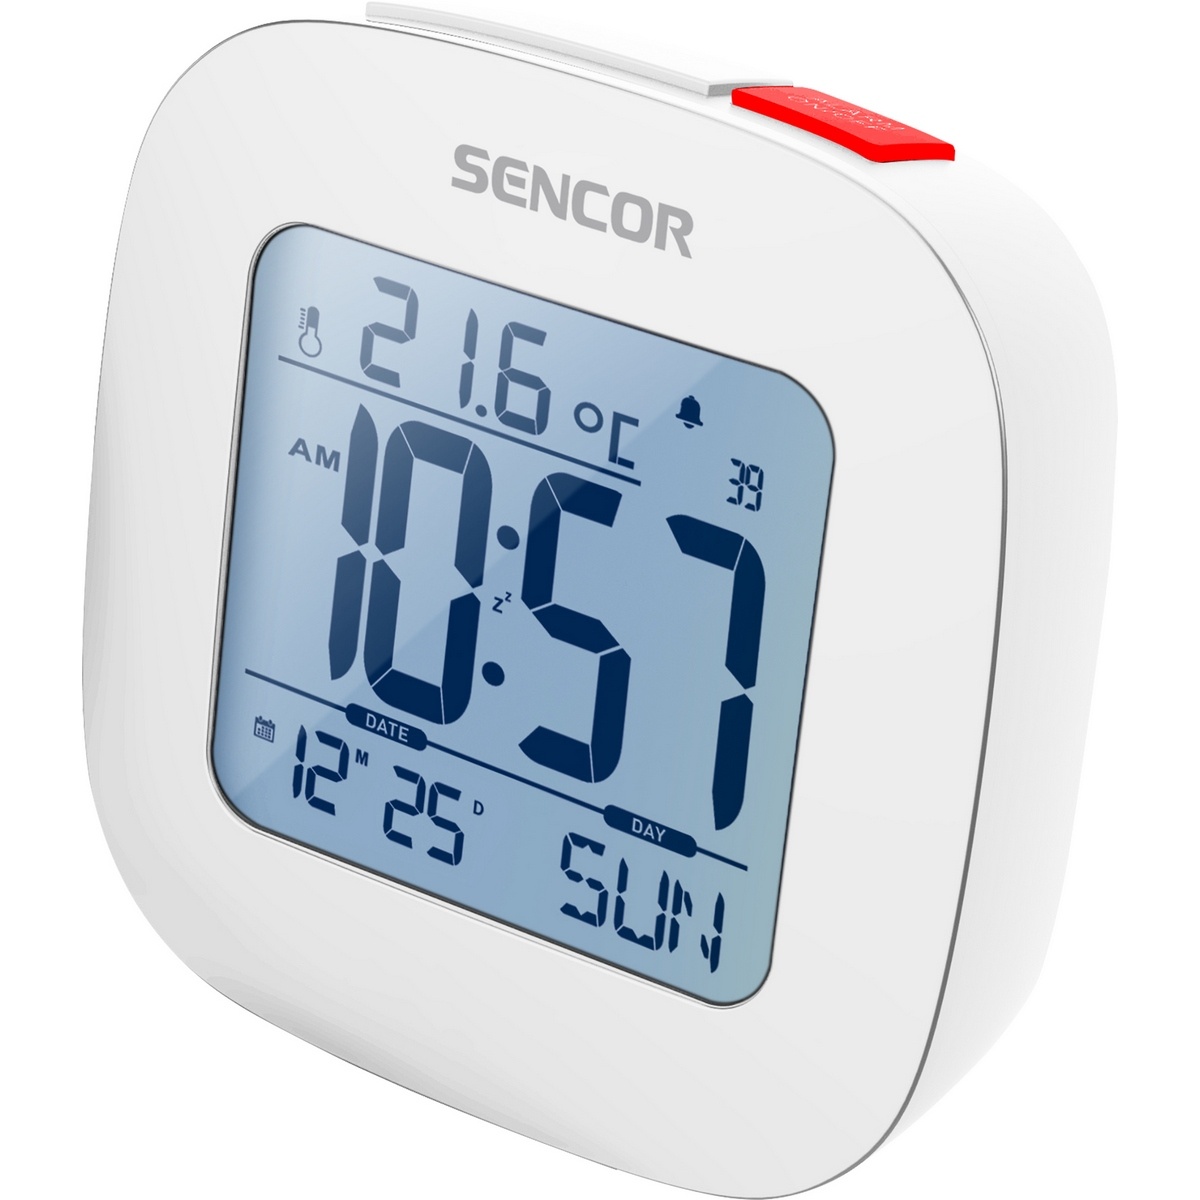 SDC 1200 W hodiny s budíkem Sencor Sencor